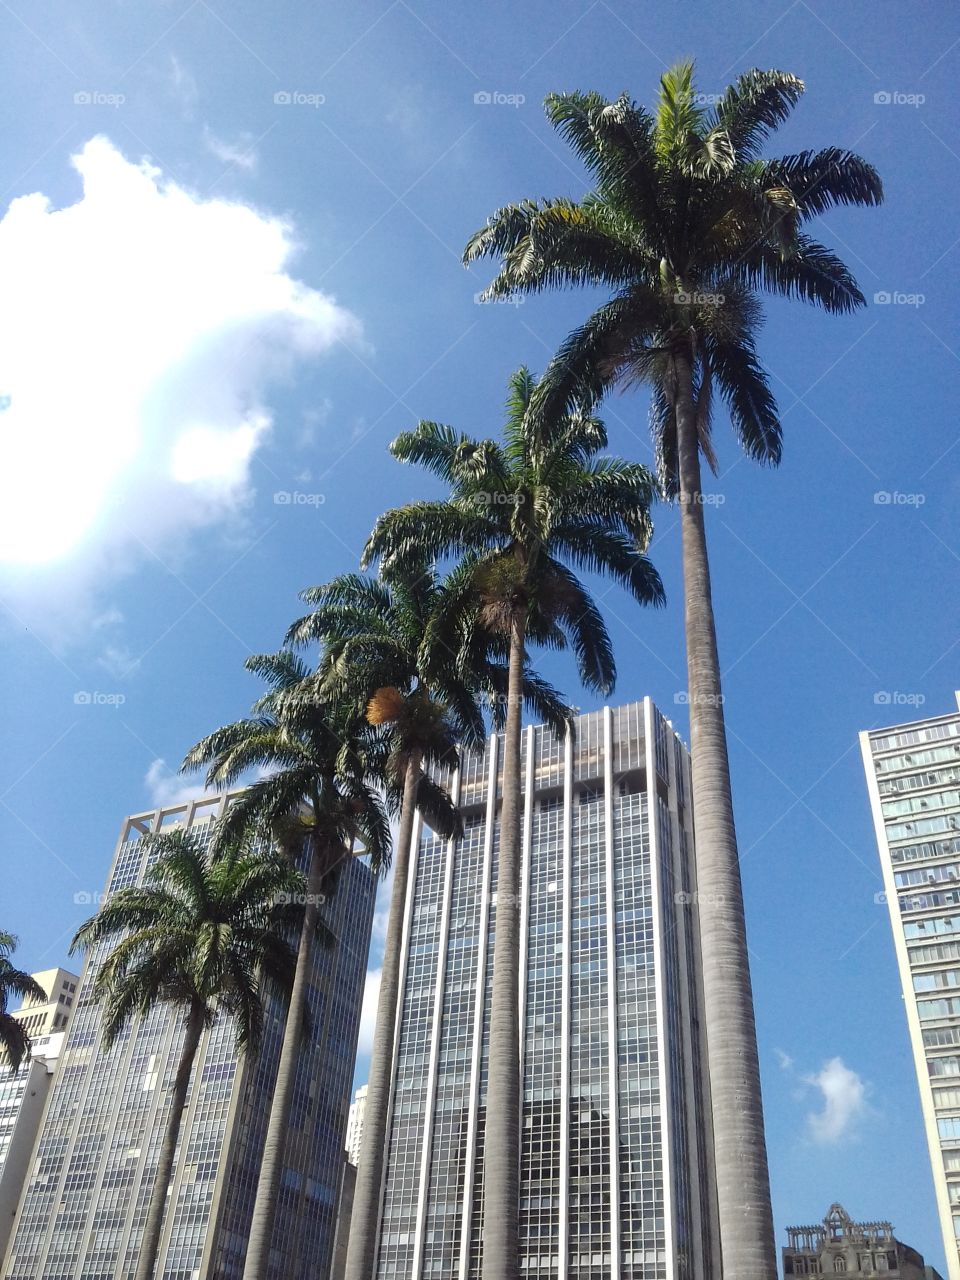 Coconut trees in Praça Ramos de Azevedo - São Paulo, Brazil